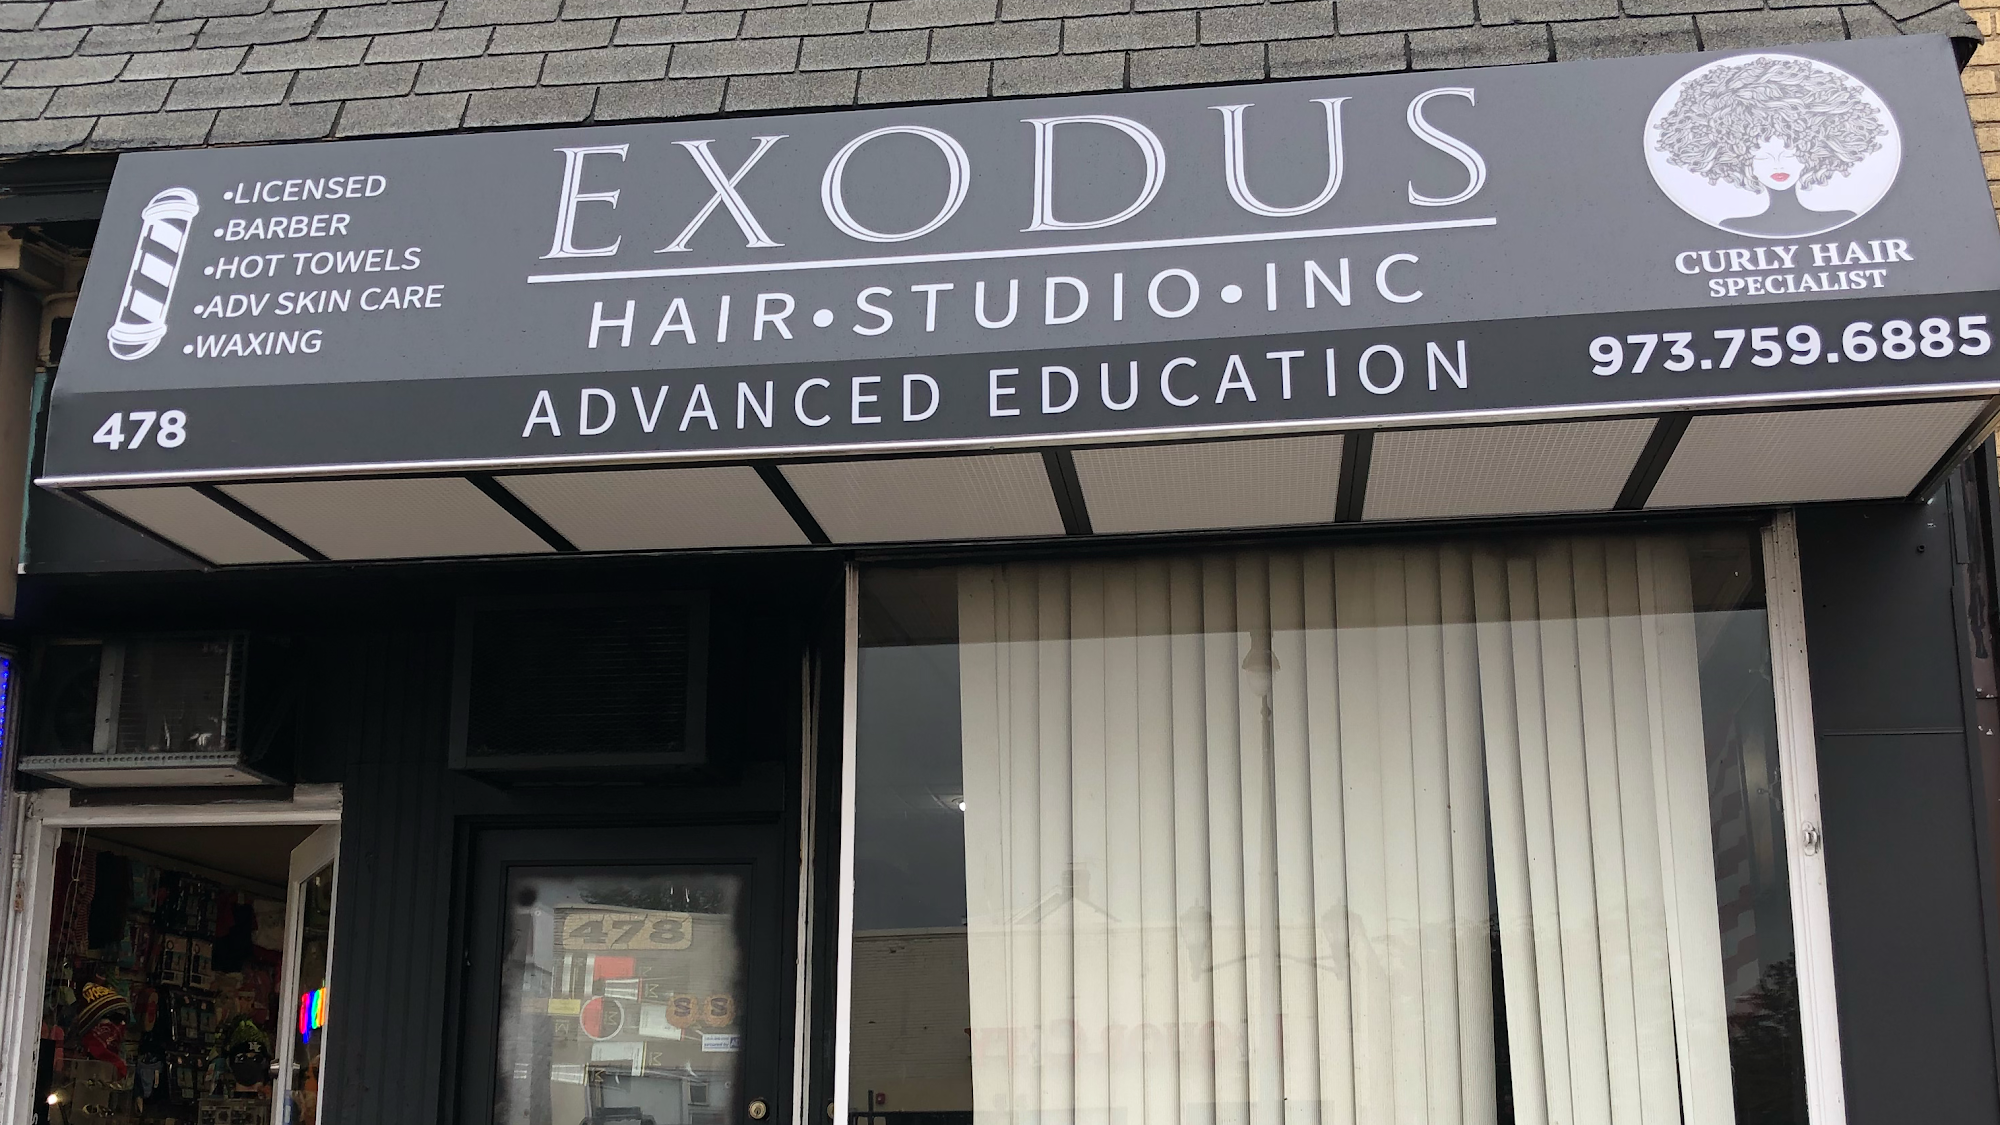 Exodus Hair Studio inc